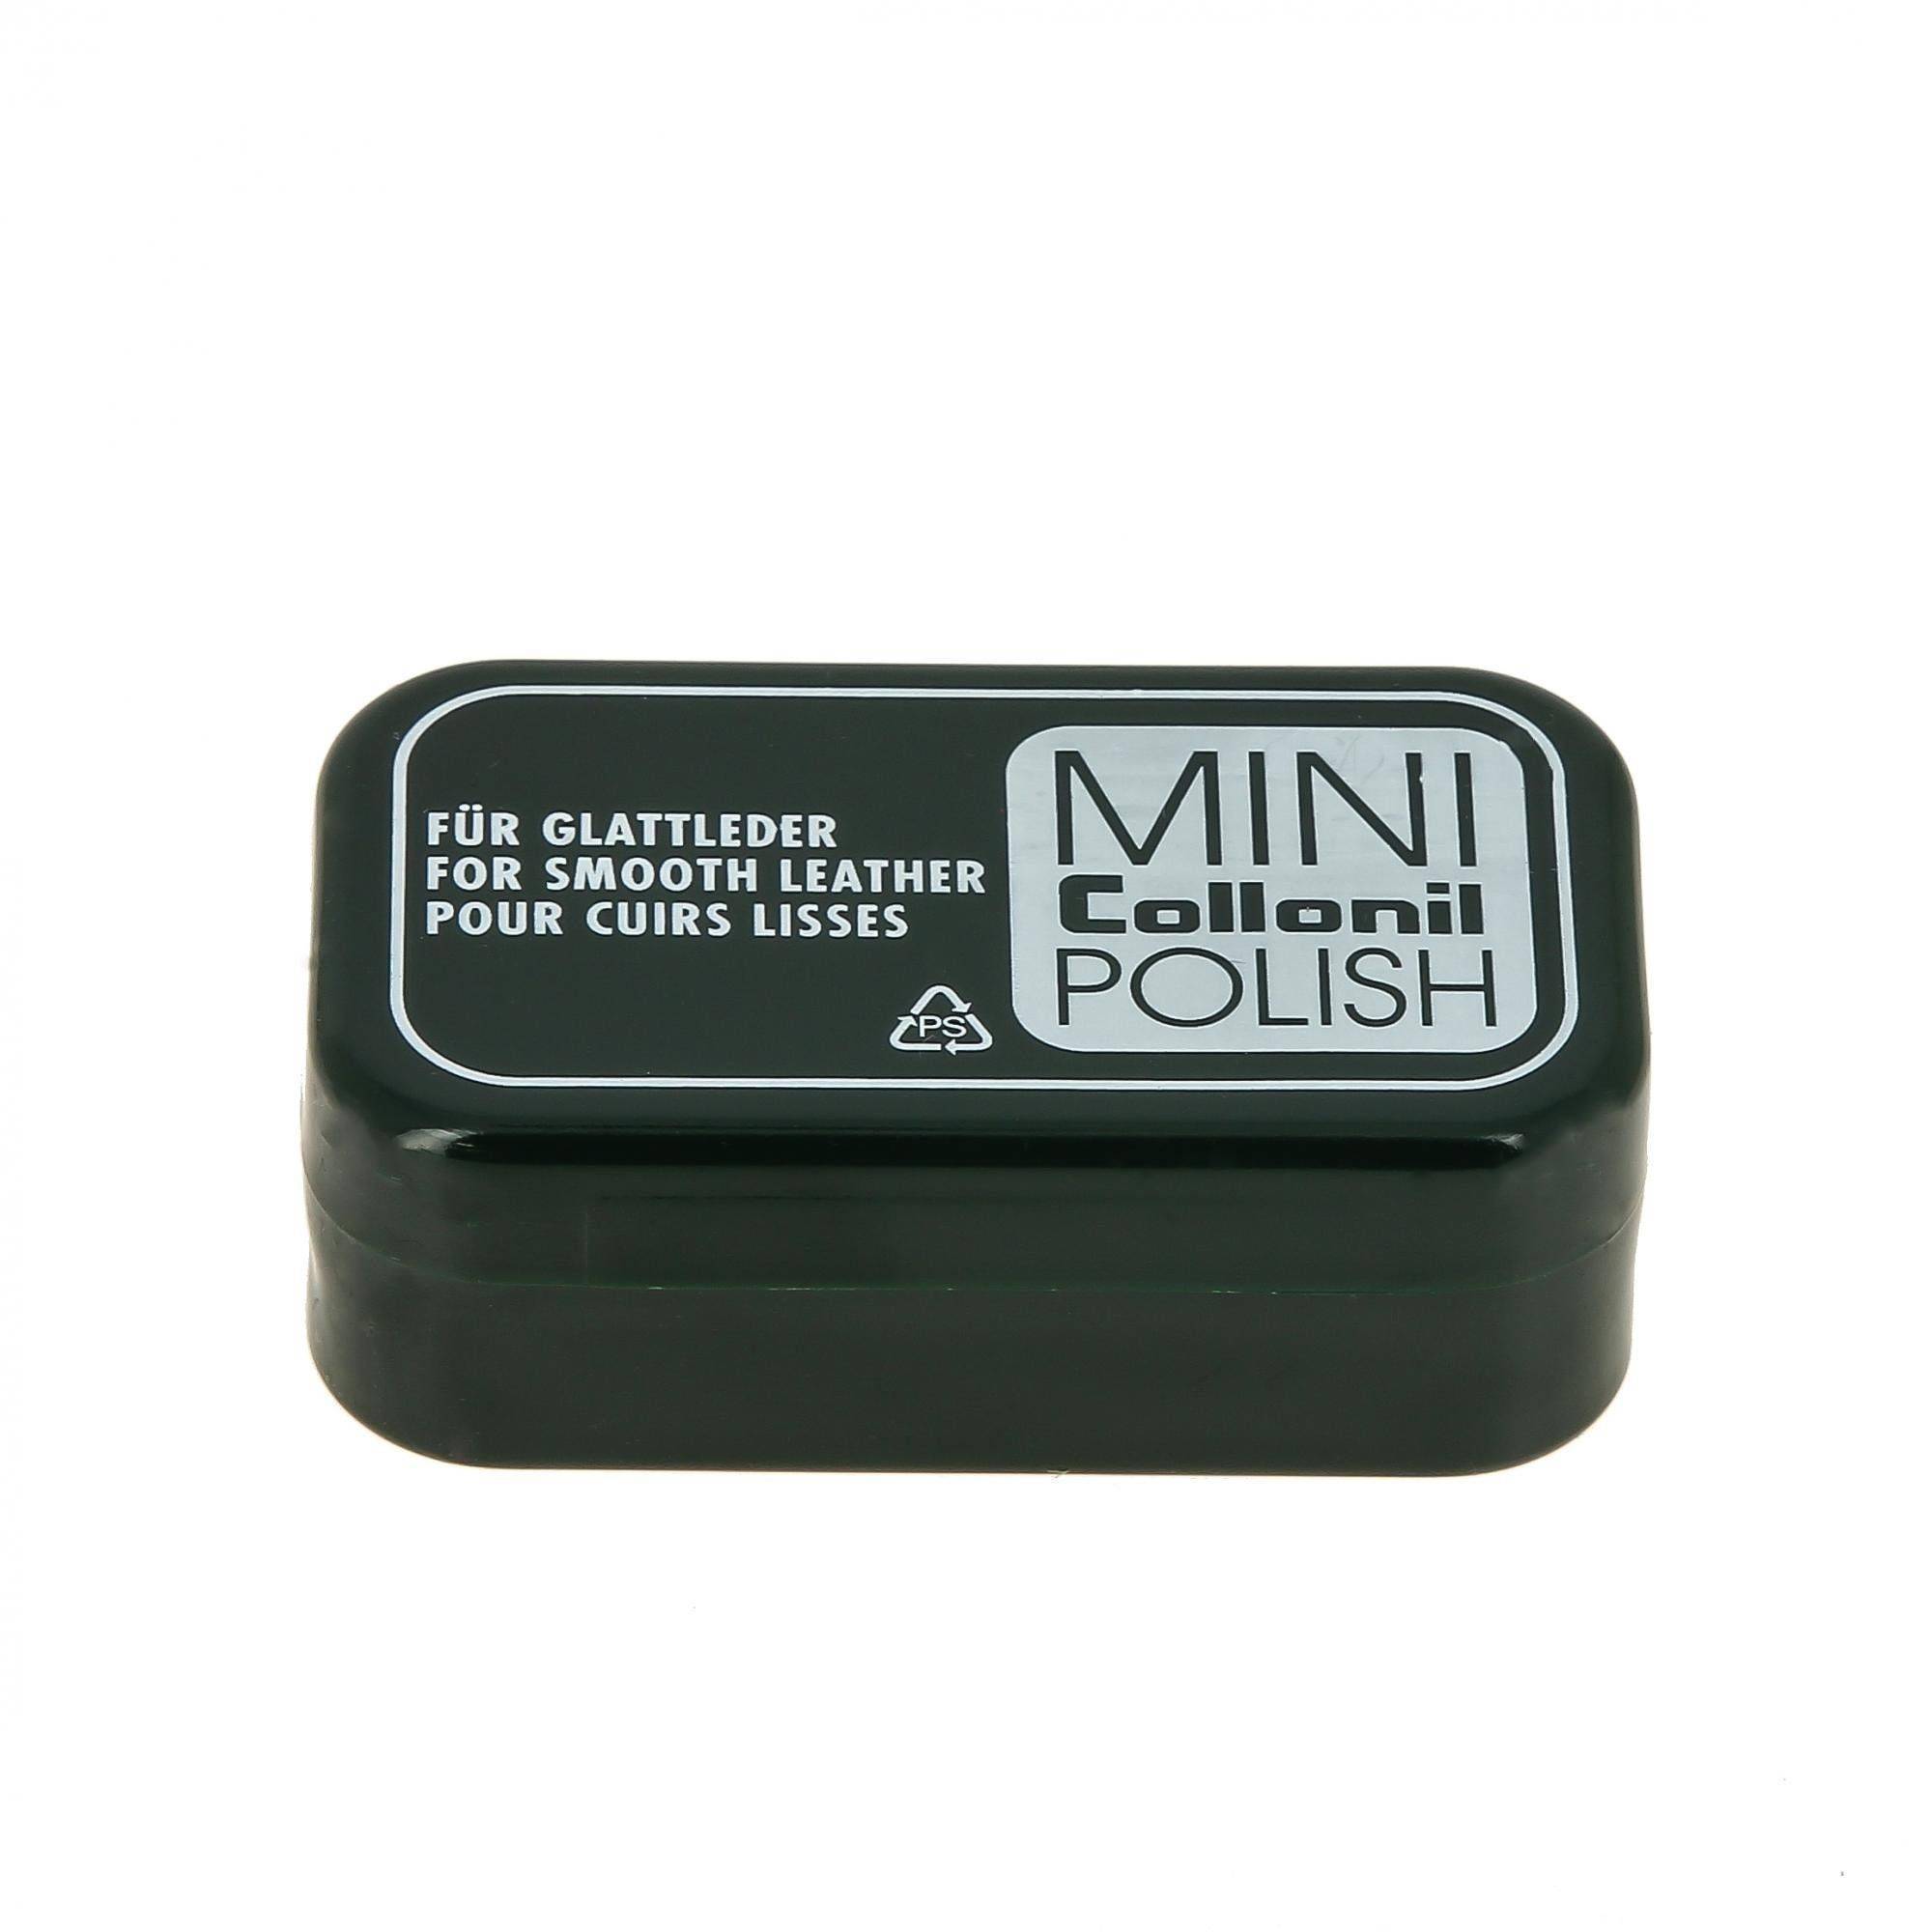 Губка COLLONIL Mini Polish, мини губка для гладкой кожи 7411000, размер ONE SIZE - фото 1